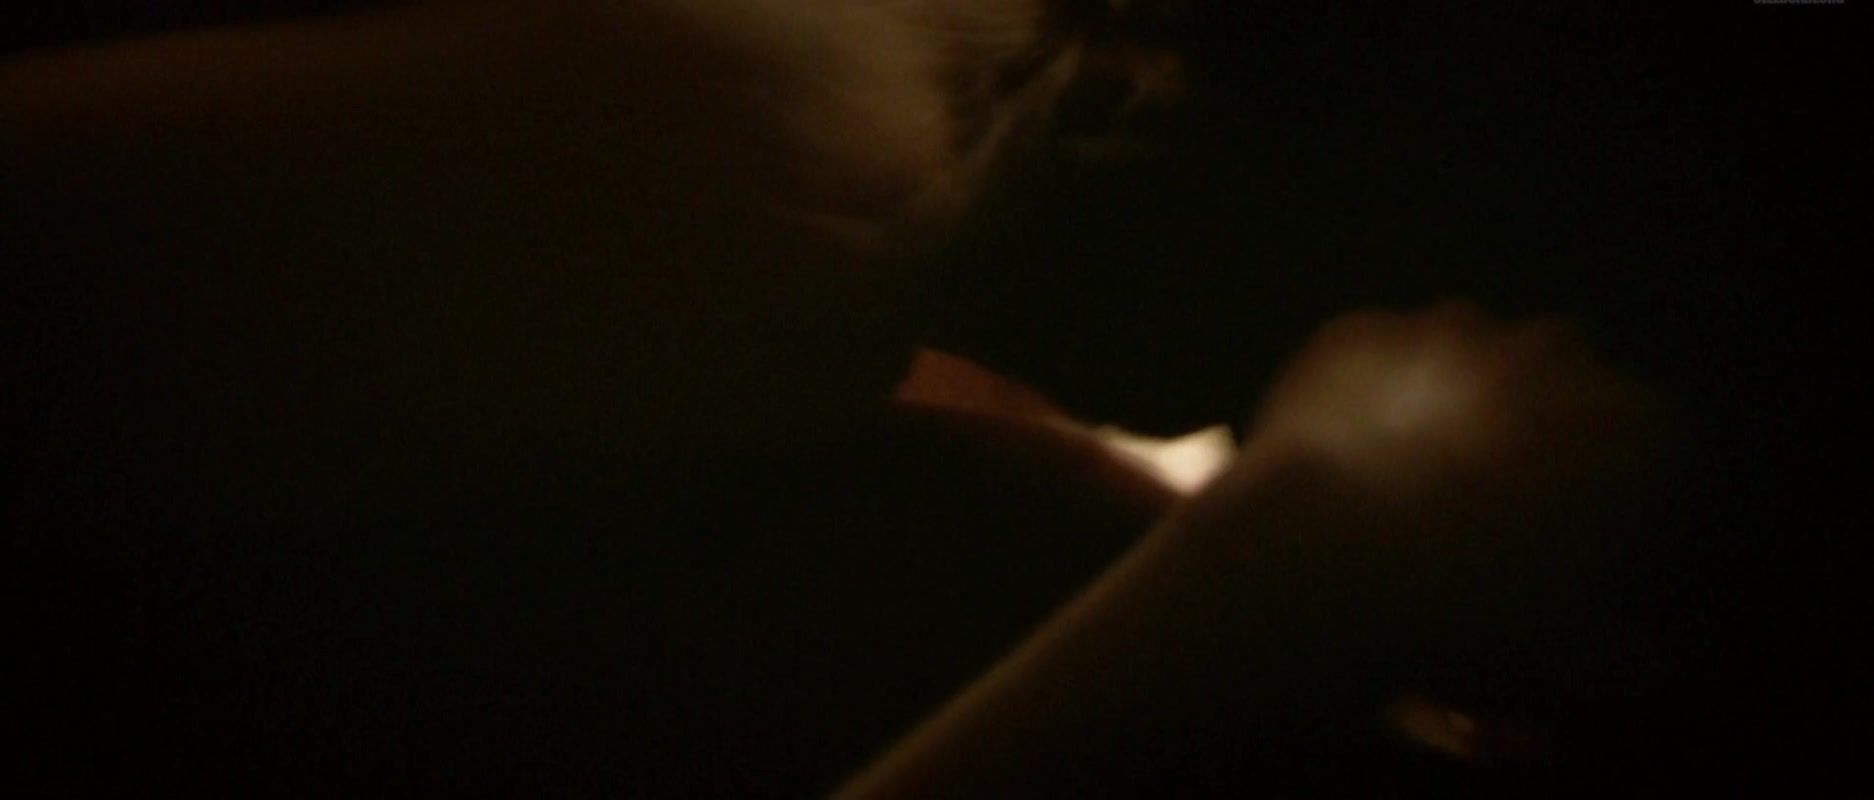 Vanessa Cage French Sex Video "Le Plaisir de Chanter" Adult Movie Gorda